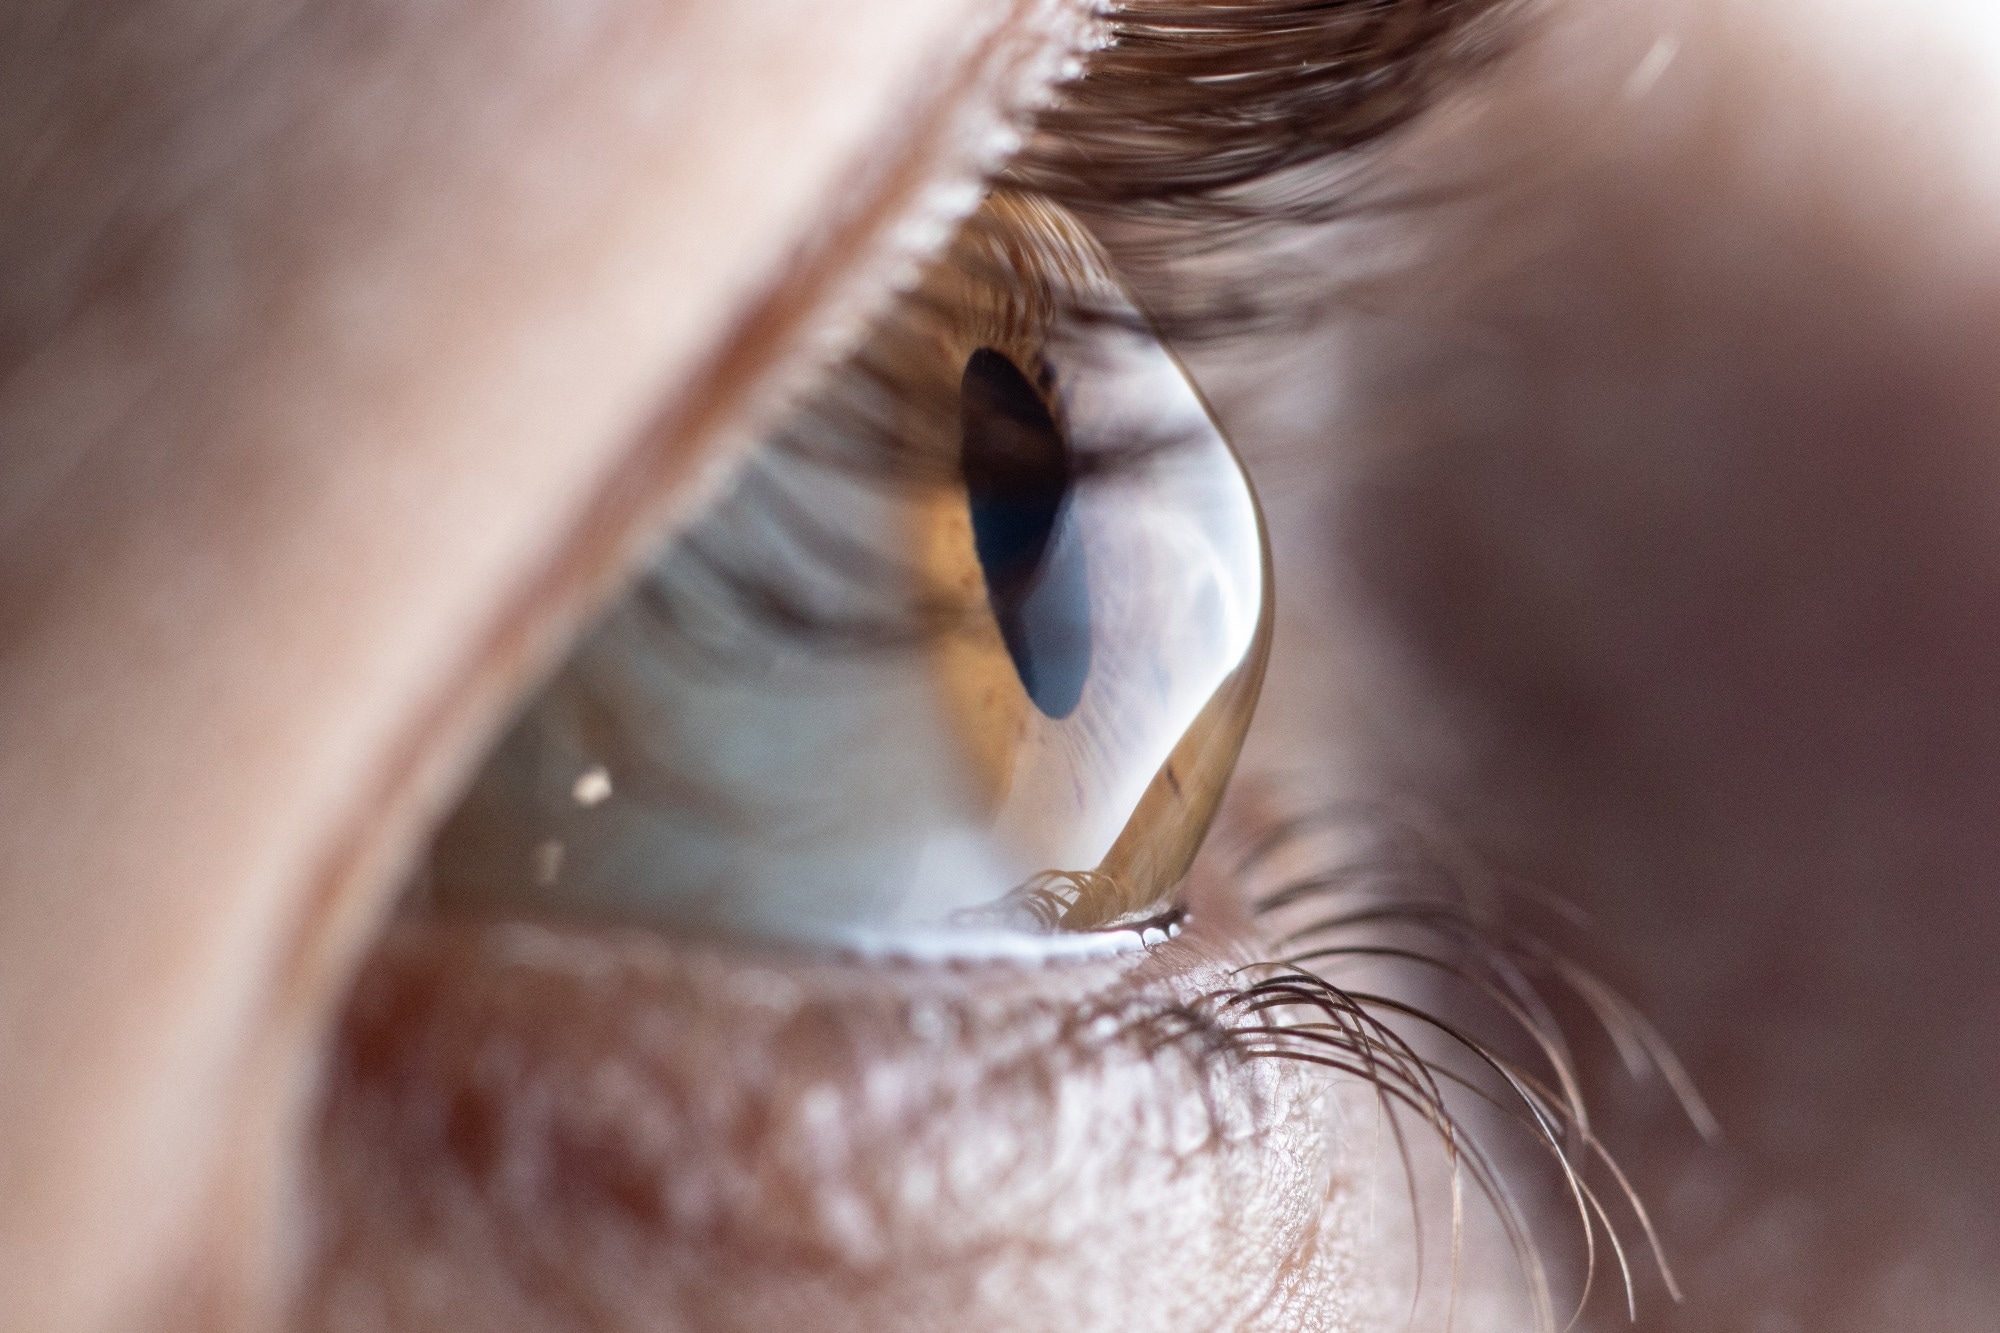 Study: Bioengineered corneal tissue for minimally invasive vision restoration in advanced keratoconus in two clinical cohorts. Image Credit: Garna Zarina/Shutterstock